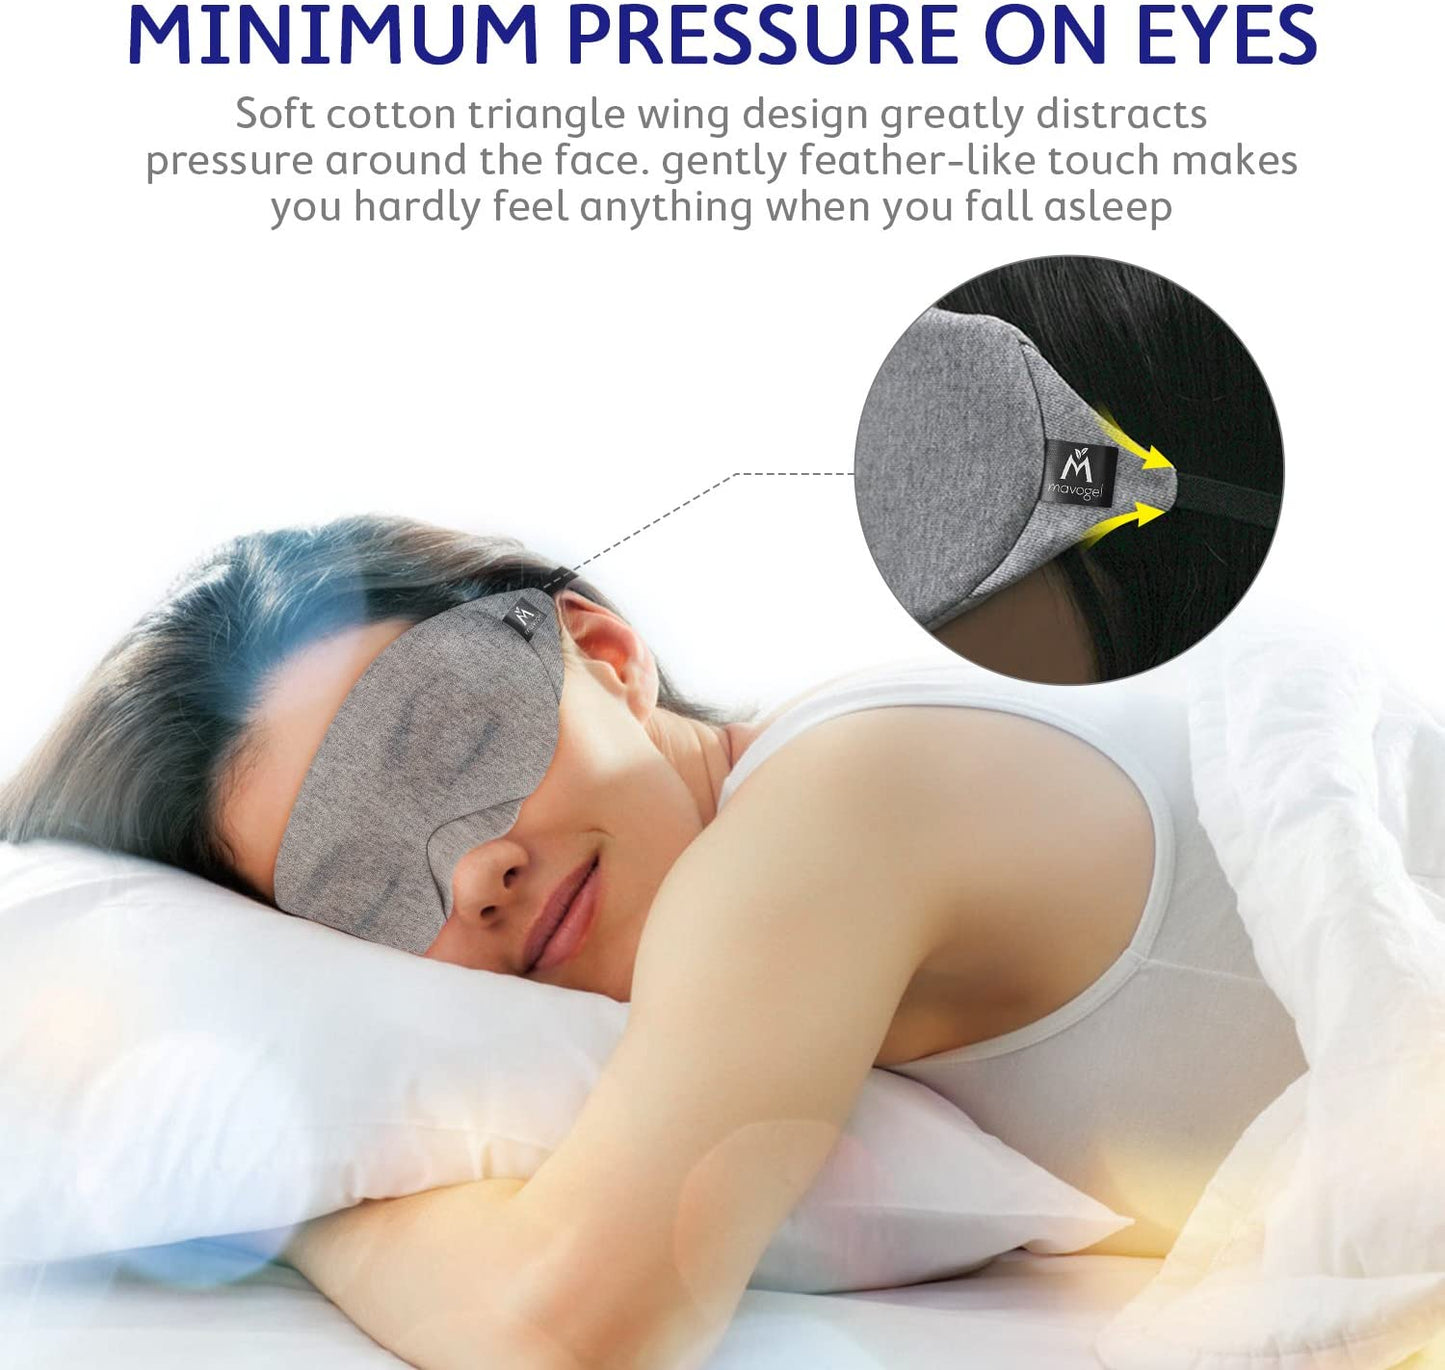 Cotton Sleep Eye Mask - Updated Design Light Blocking Sleep Mask, Soft and Comfortable Night Eye Mask for Men Women, Eye Blinder for Travel/Sleeping, Includes Travel Pouch, Grey